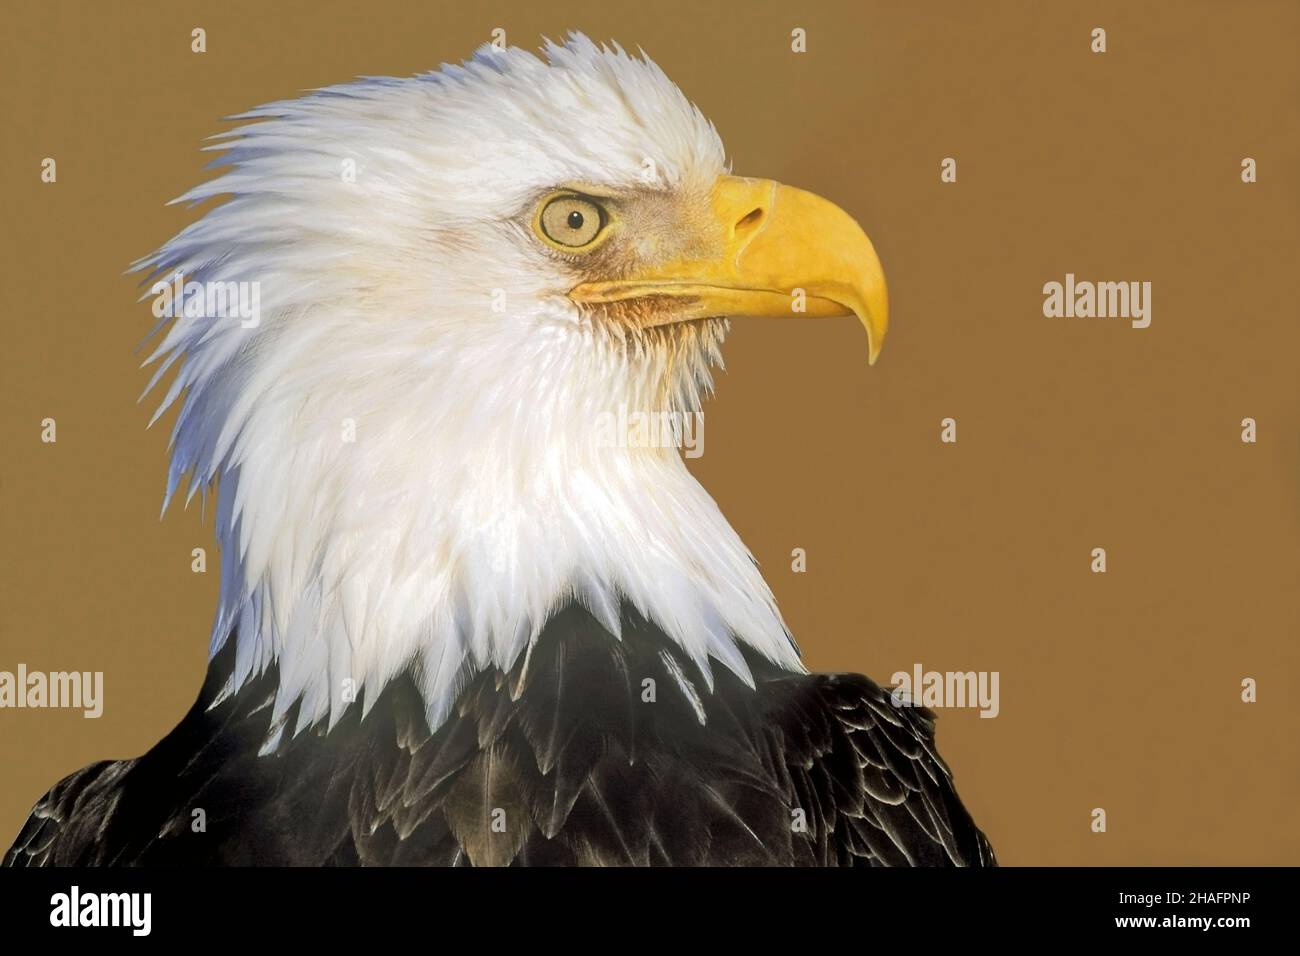 Mature Bald Eagle head portrait against blurred light brown background Stock Photo